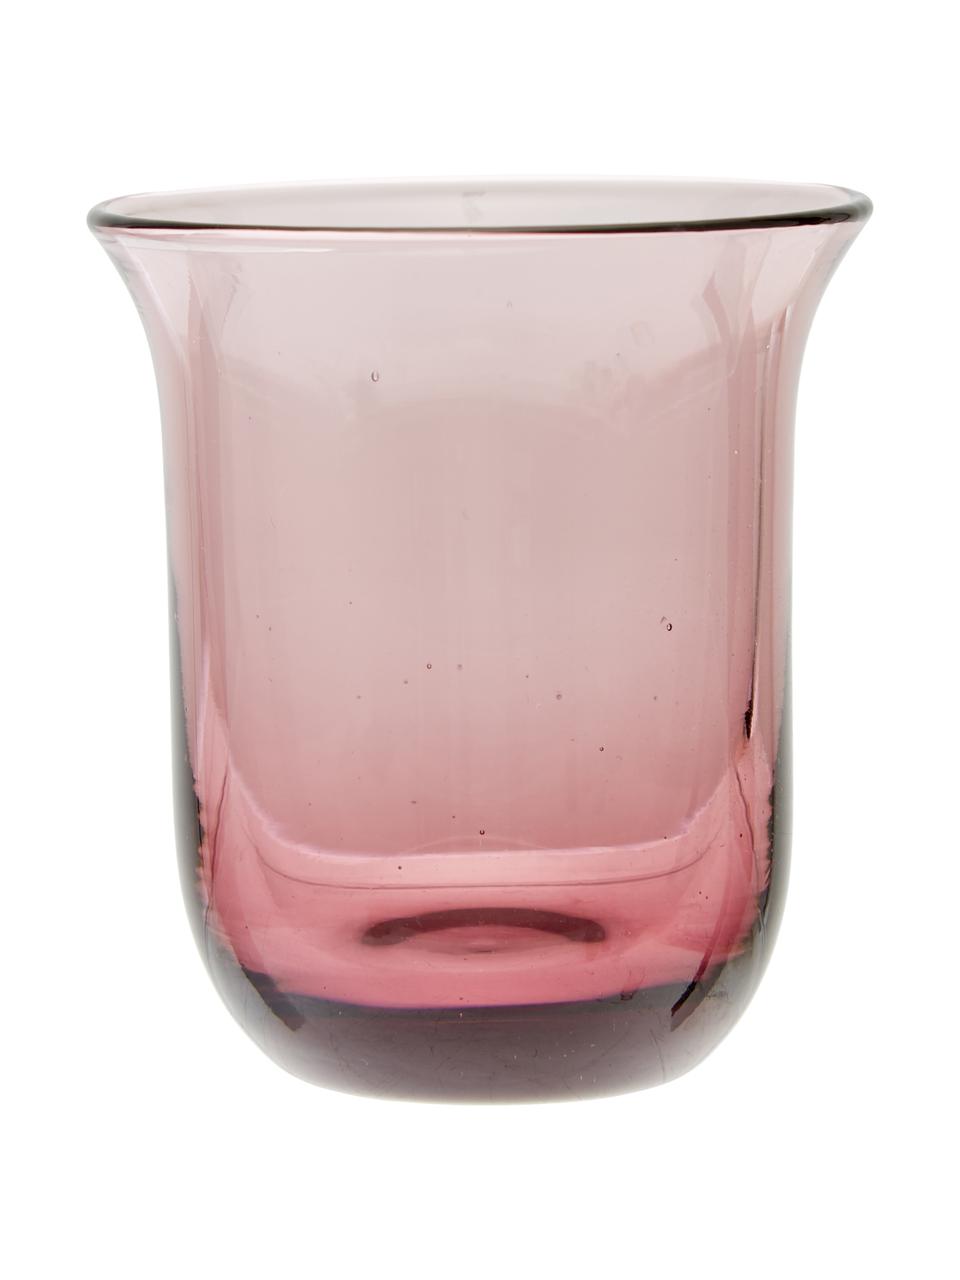 Vasos chupito de vidrio soplados artesanalmente Desiguale, 6 uds., Vidrio soplado artesanalmente, Multicolor, Ø 6 x Al 6 cm, 90 ml